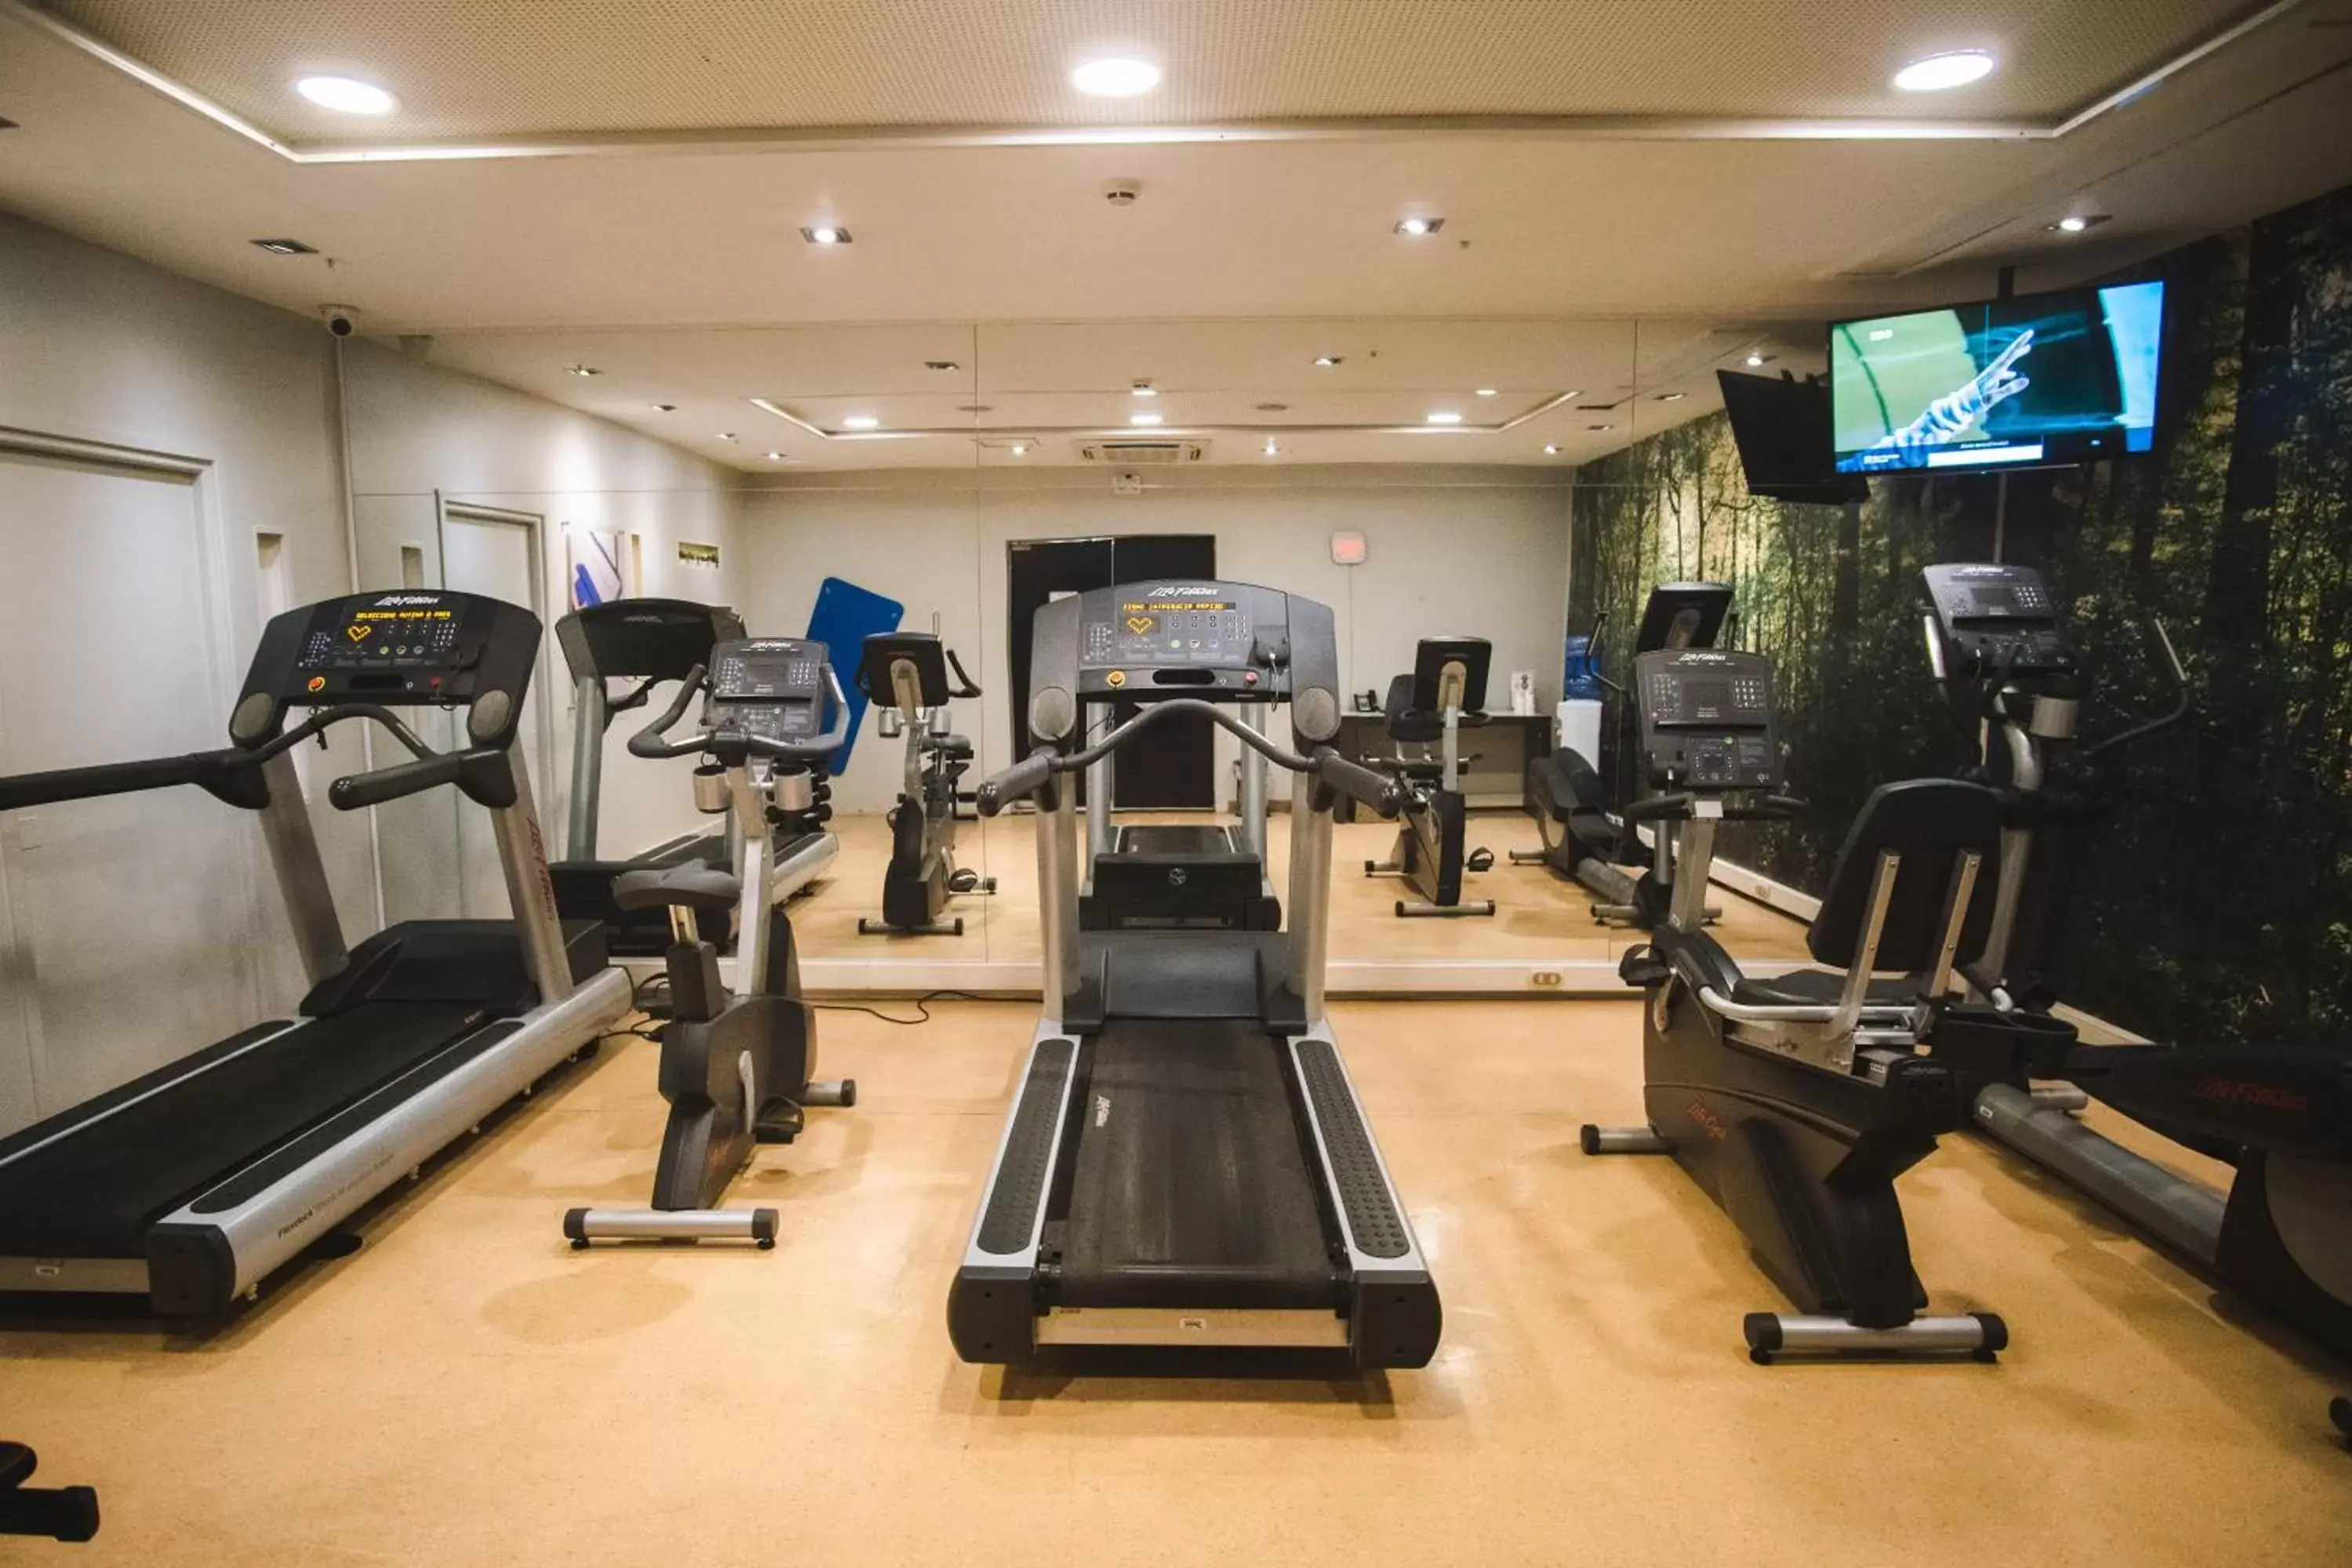 Fitness centre/facilities, Fitness Center/Facilities in Novotel Santiago Vitacura